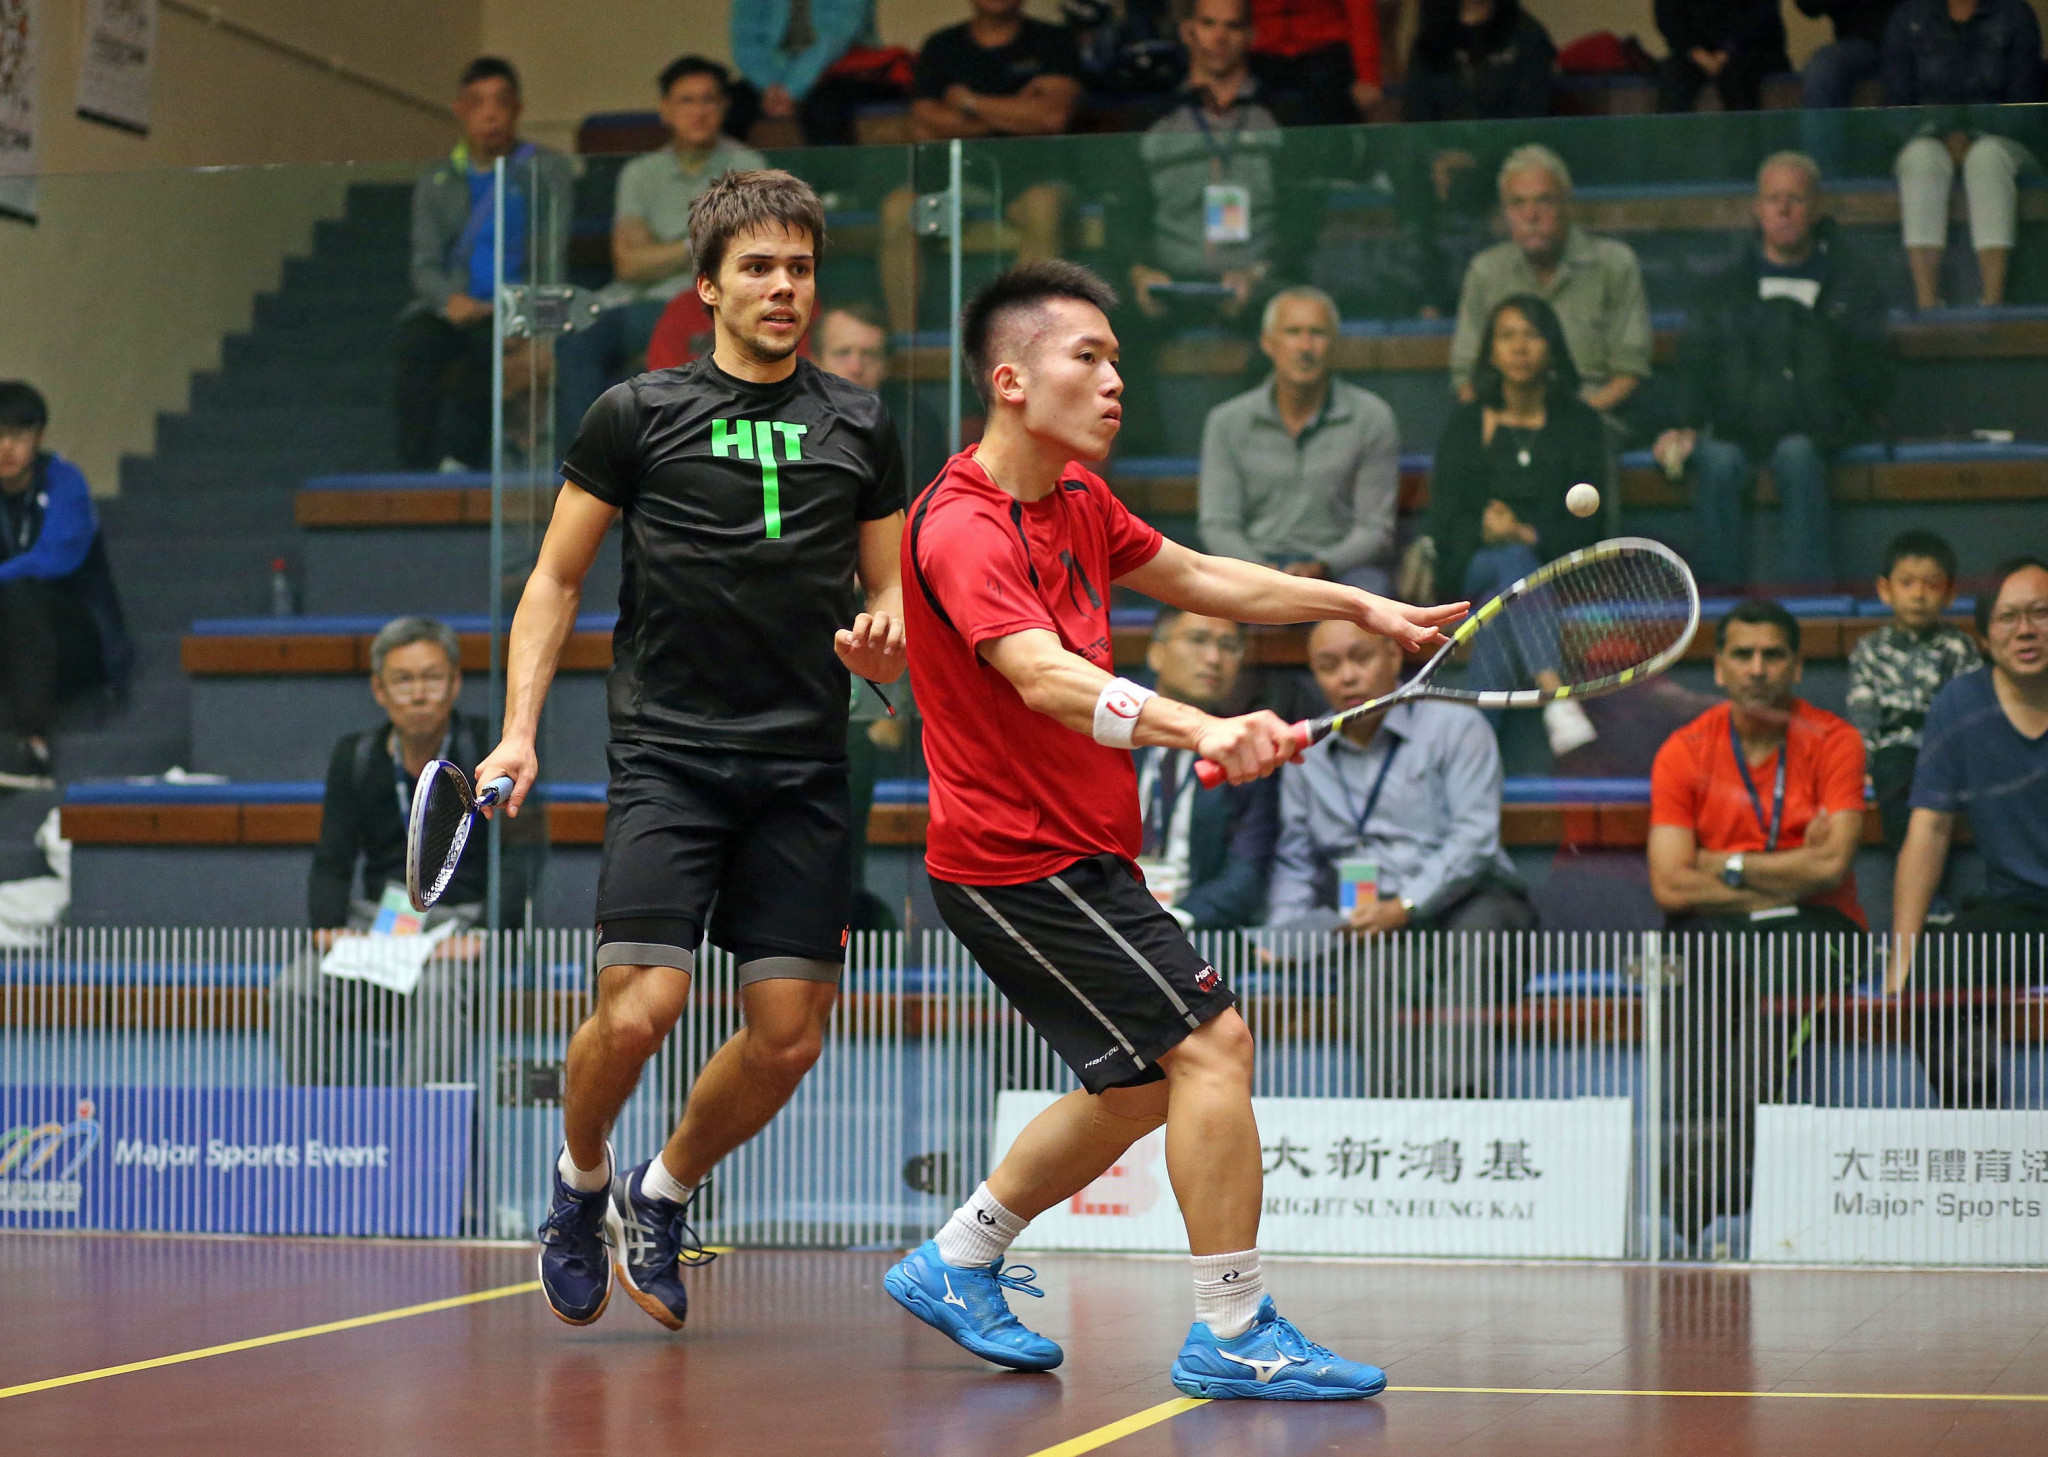 Hong Kong's Tsz Fung Yip beat Finland's Olli Tuominen to progress to the next round of the PSA Hong Kong Open ©PSA